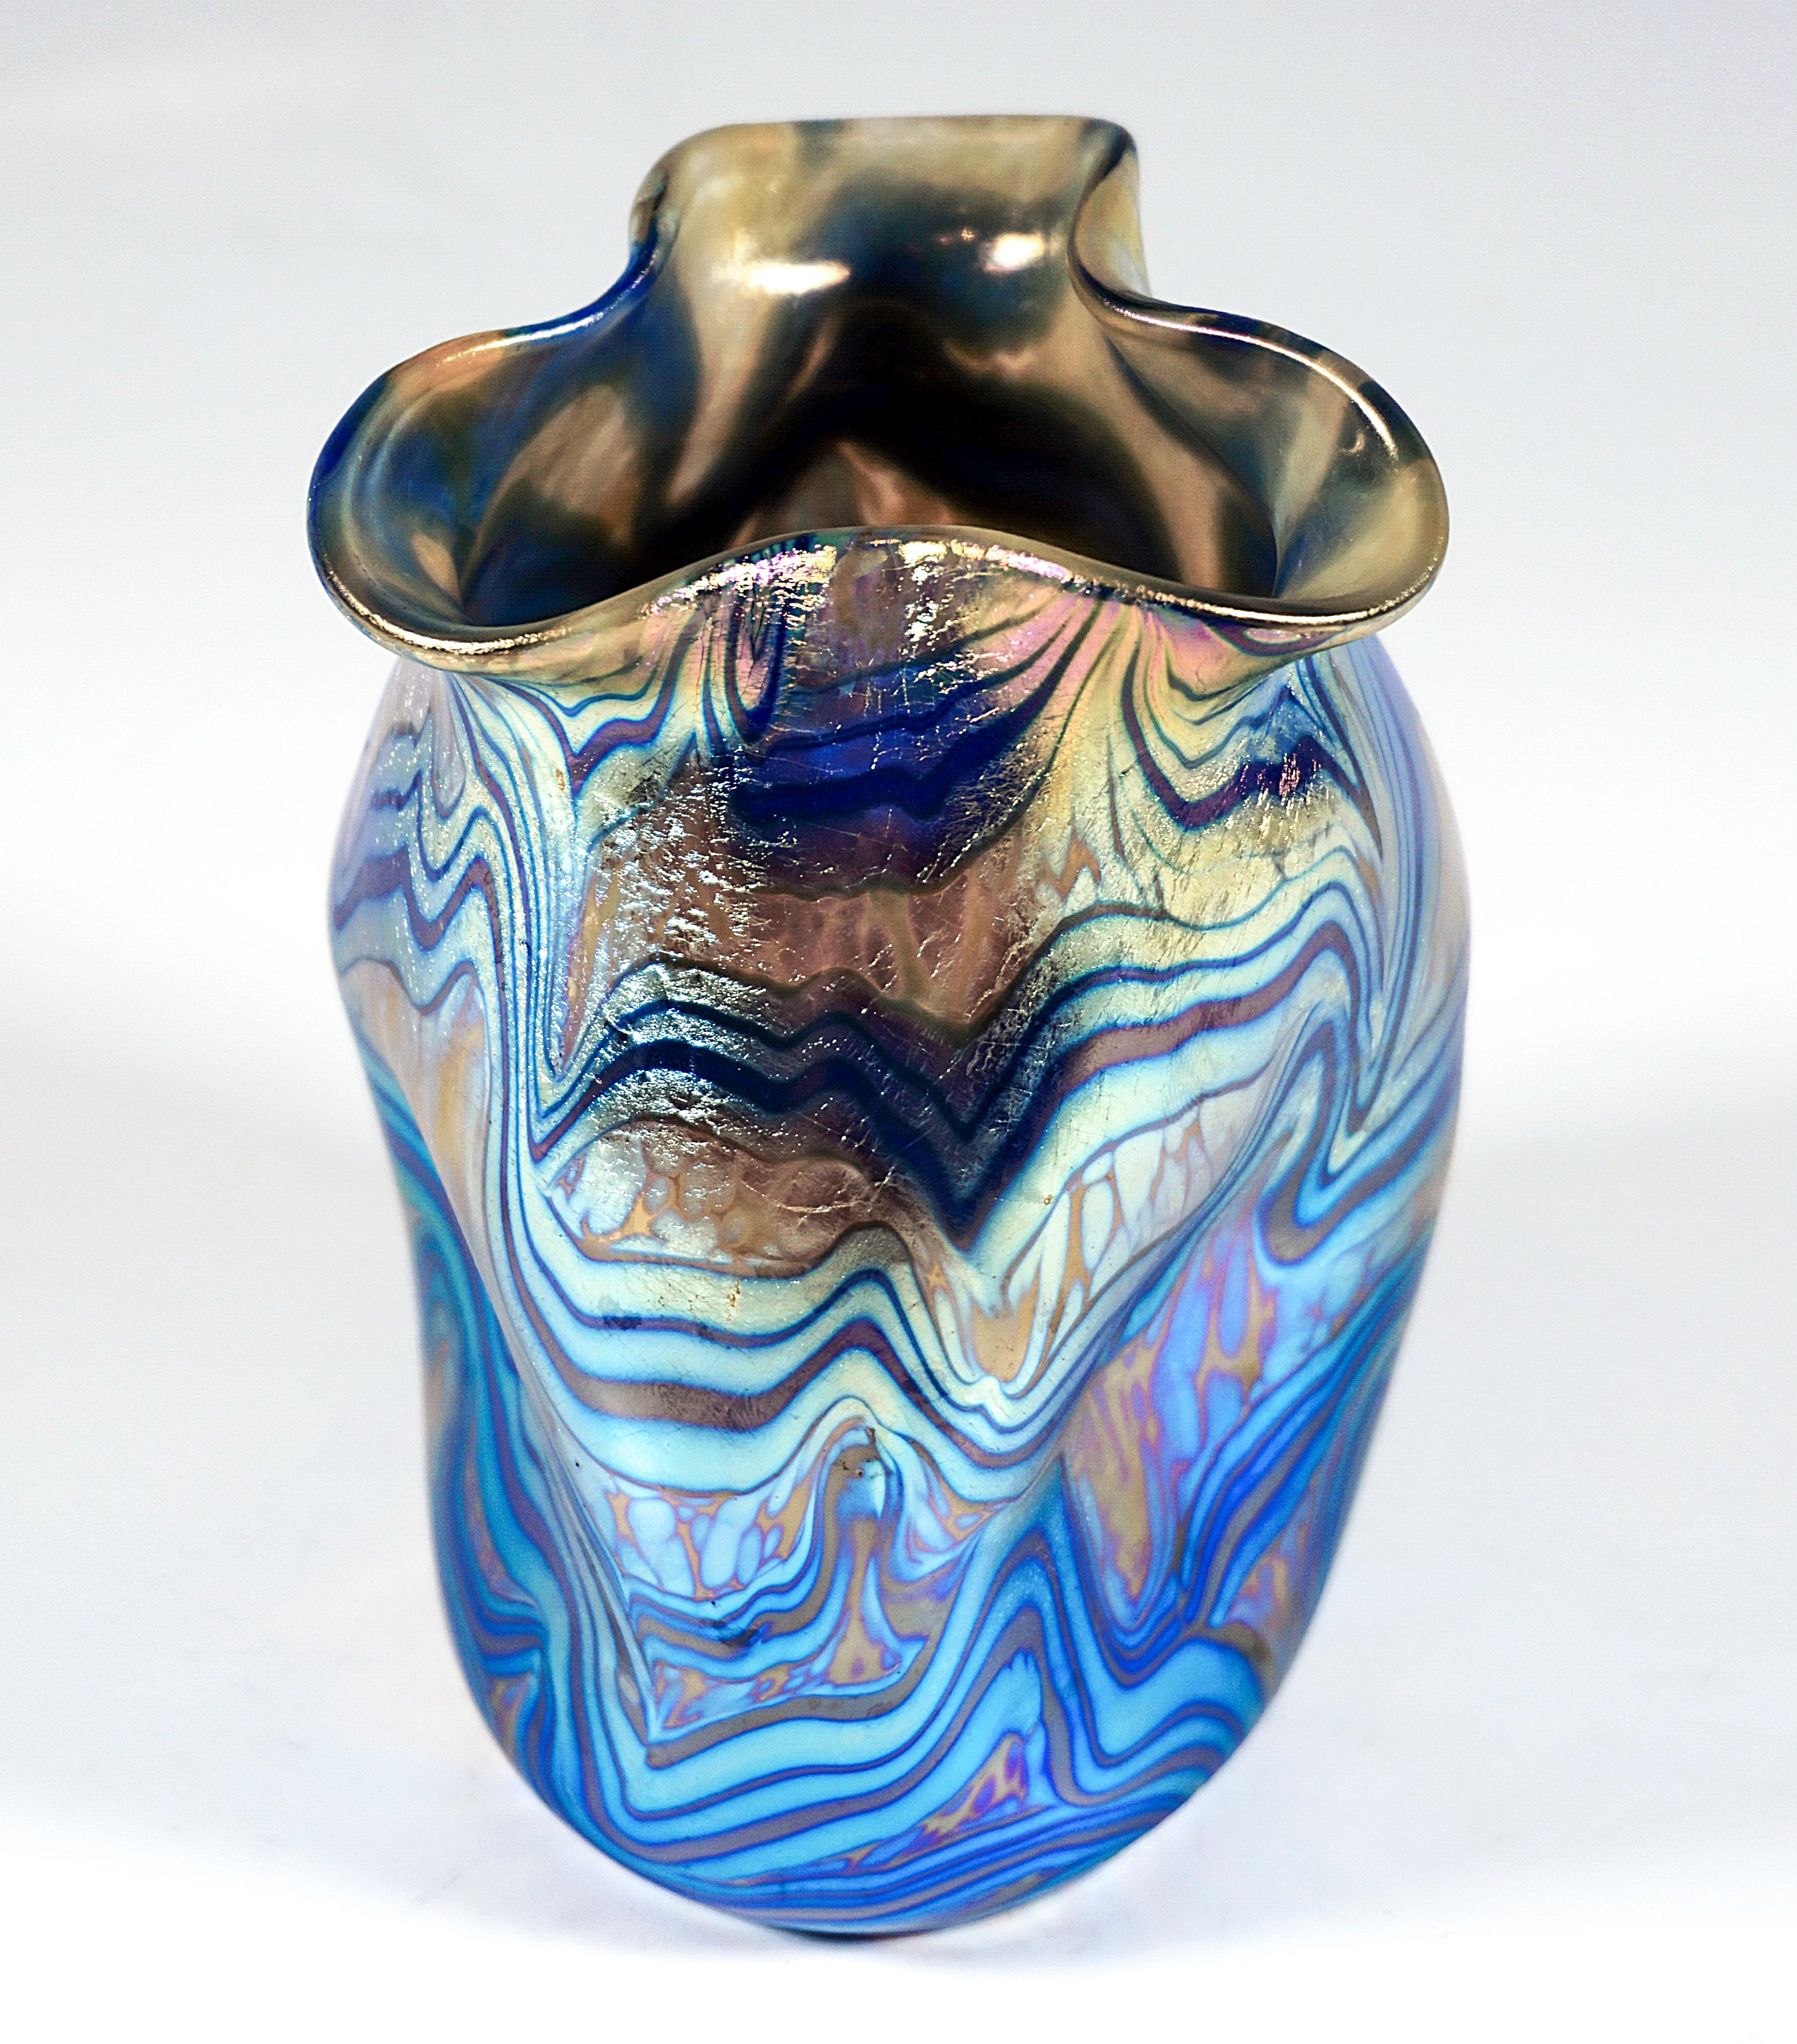 Hand-Crafted Loetz Art Nouveau Glass Vase Phenomenon Genre 1/104, Austria-Hungary, Ca 1900 For Sale